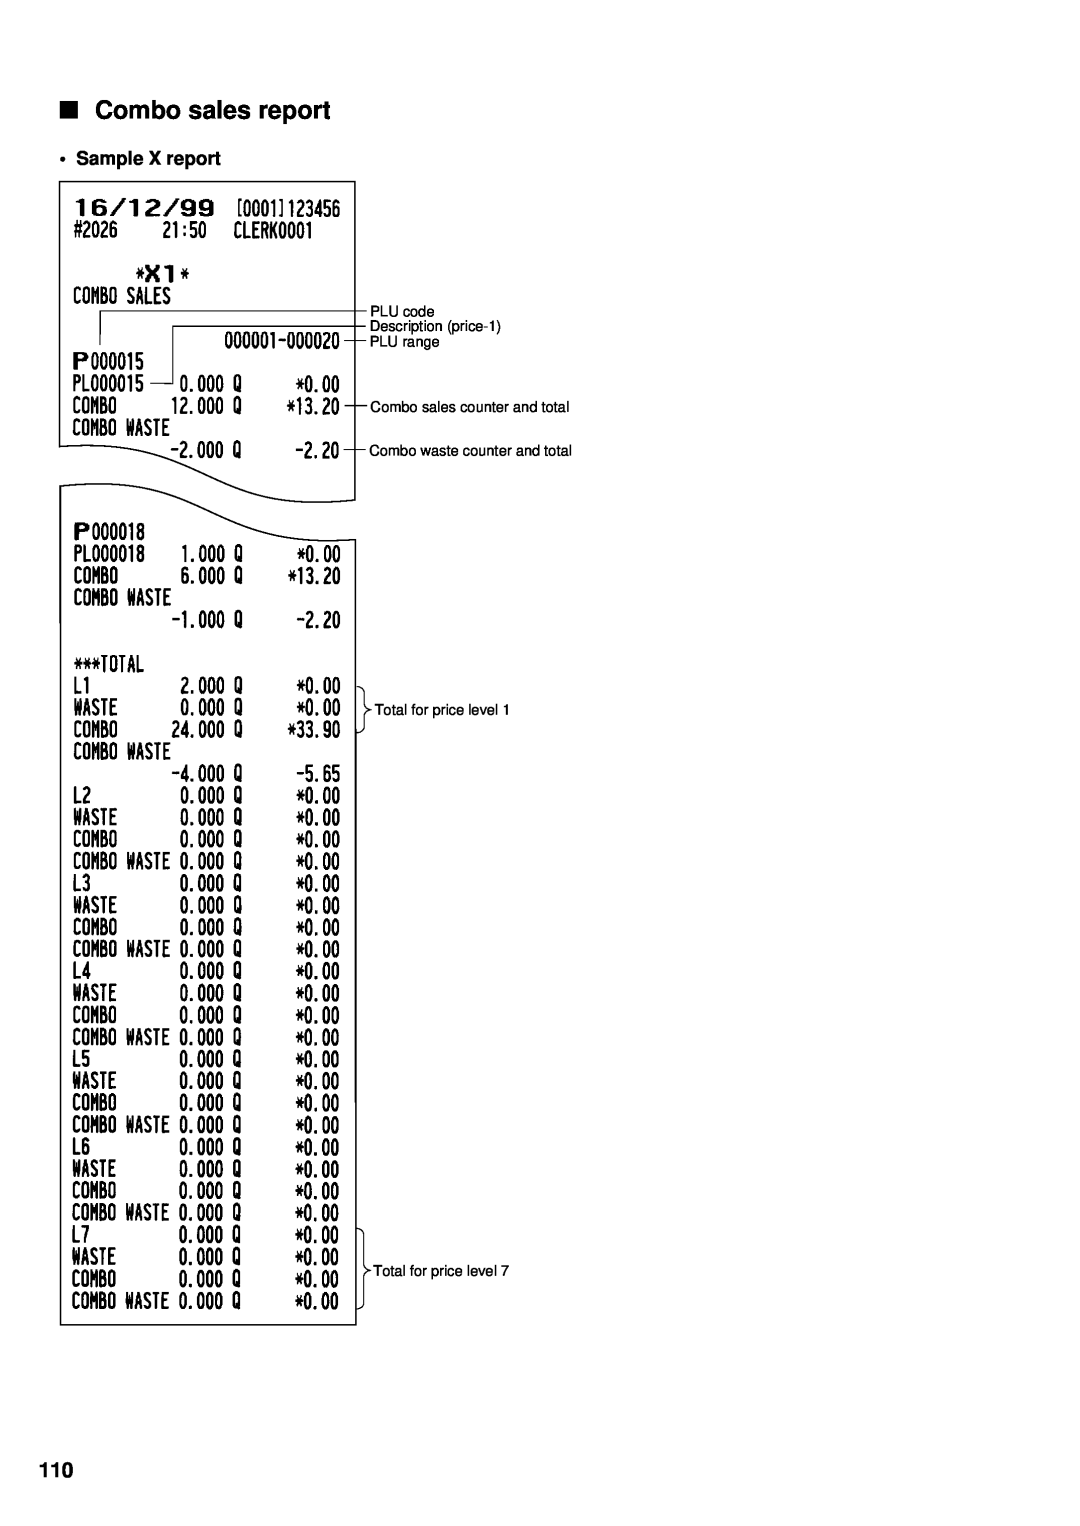 Sharp UP-3300 Combo sales report, • Sample X report, PLU code Description price-1 PLU range, Combo sales counter and total 